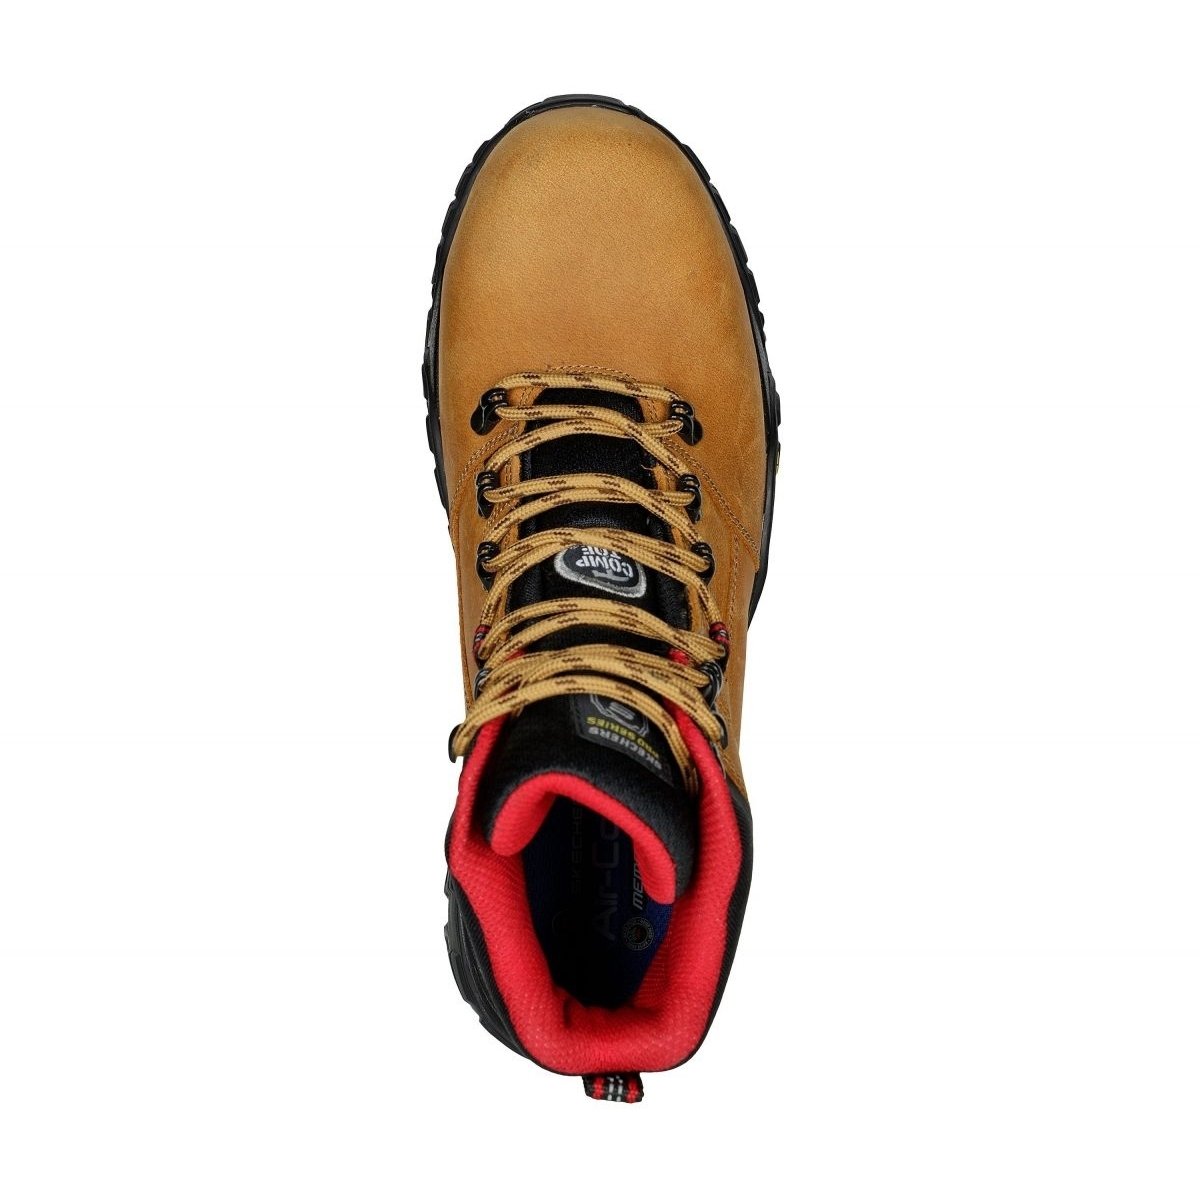 Skechers Men's, Treadix Goodyear Comp Toe Work Boot BROWN - Tan, 11.5